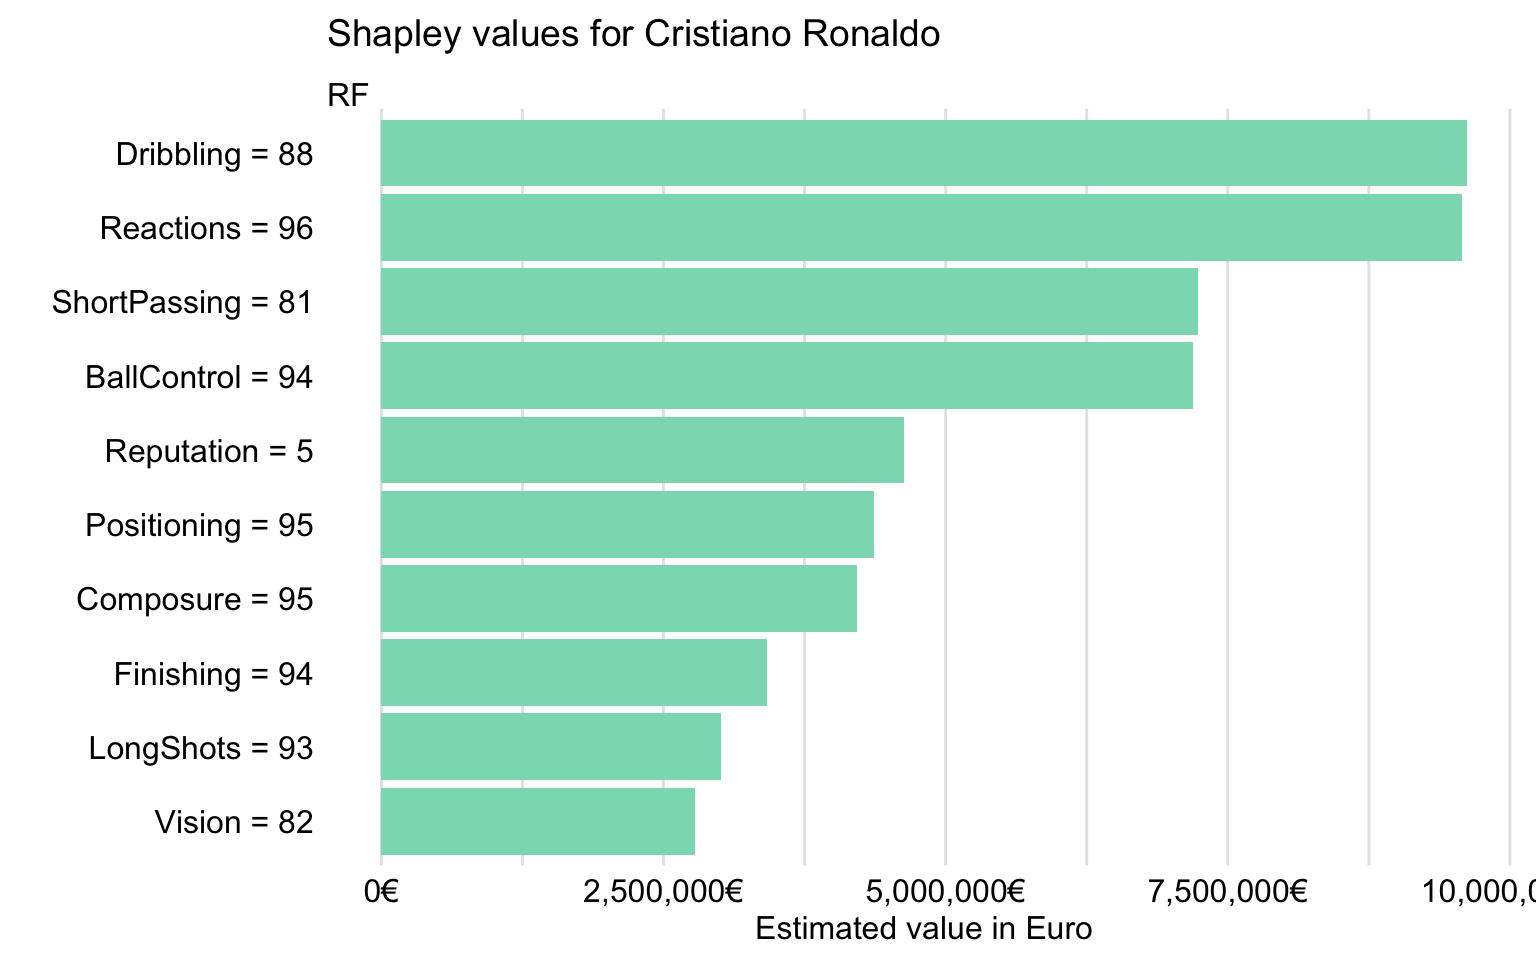 Shapley values for Cristiano Ronaldo for the random forest model.